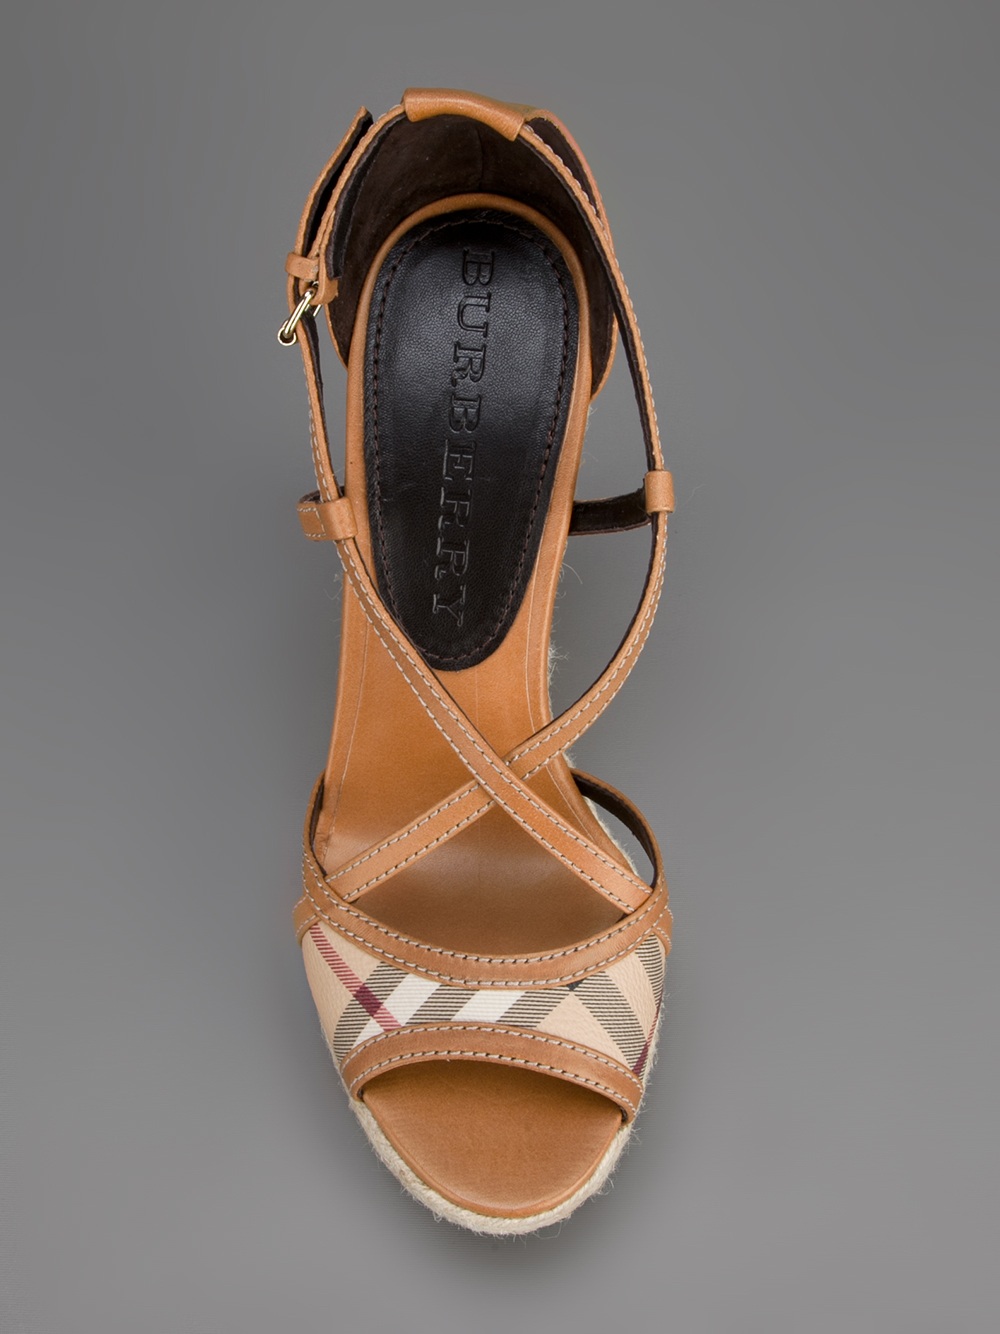 Burberry Wedge Sandal in Brown - Lyst